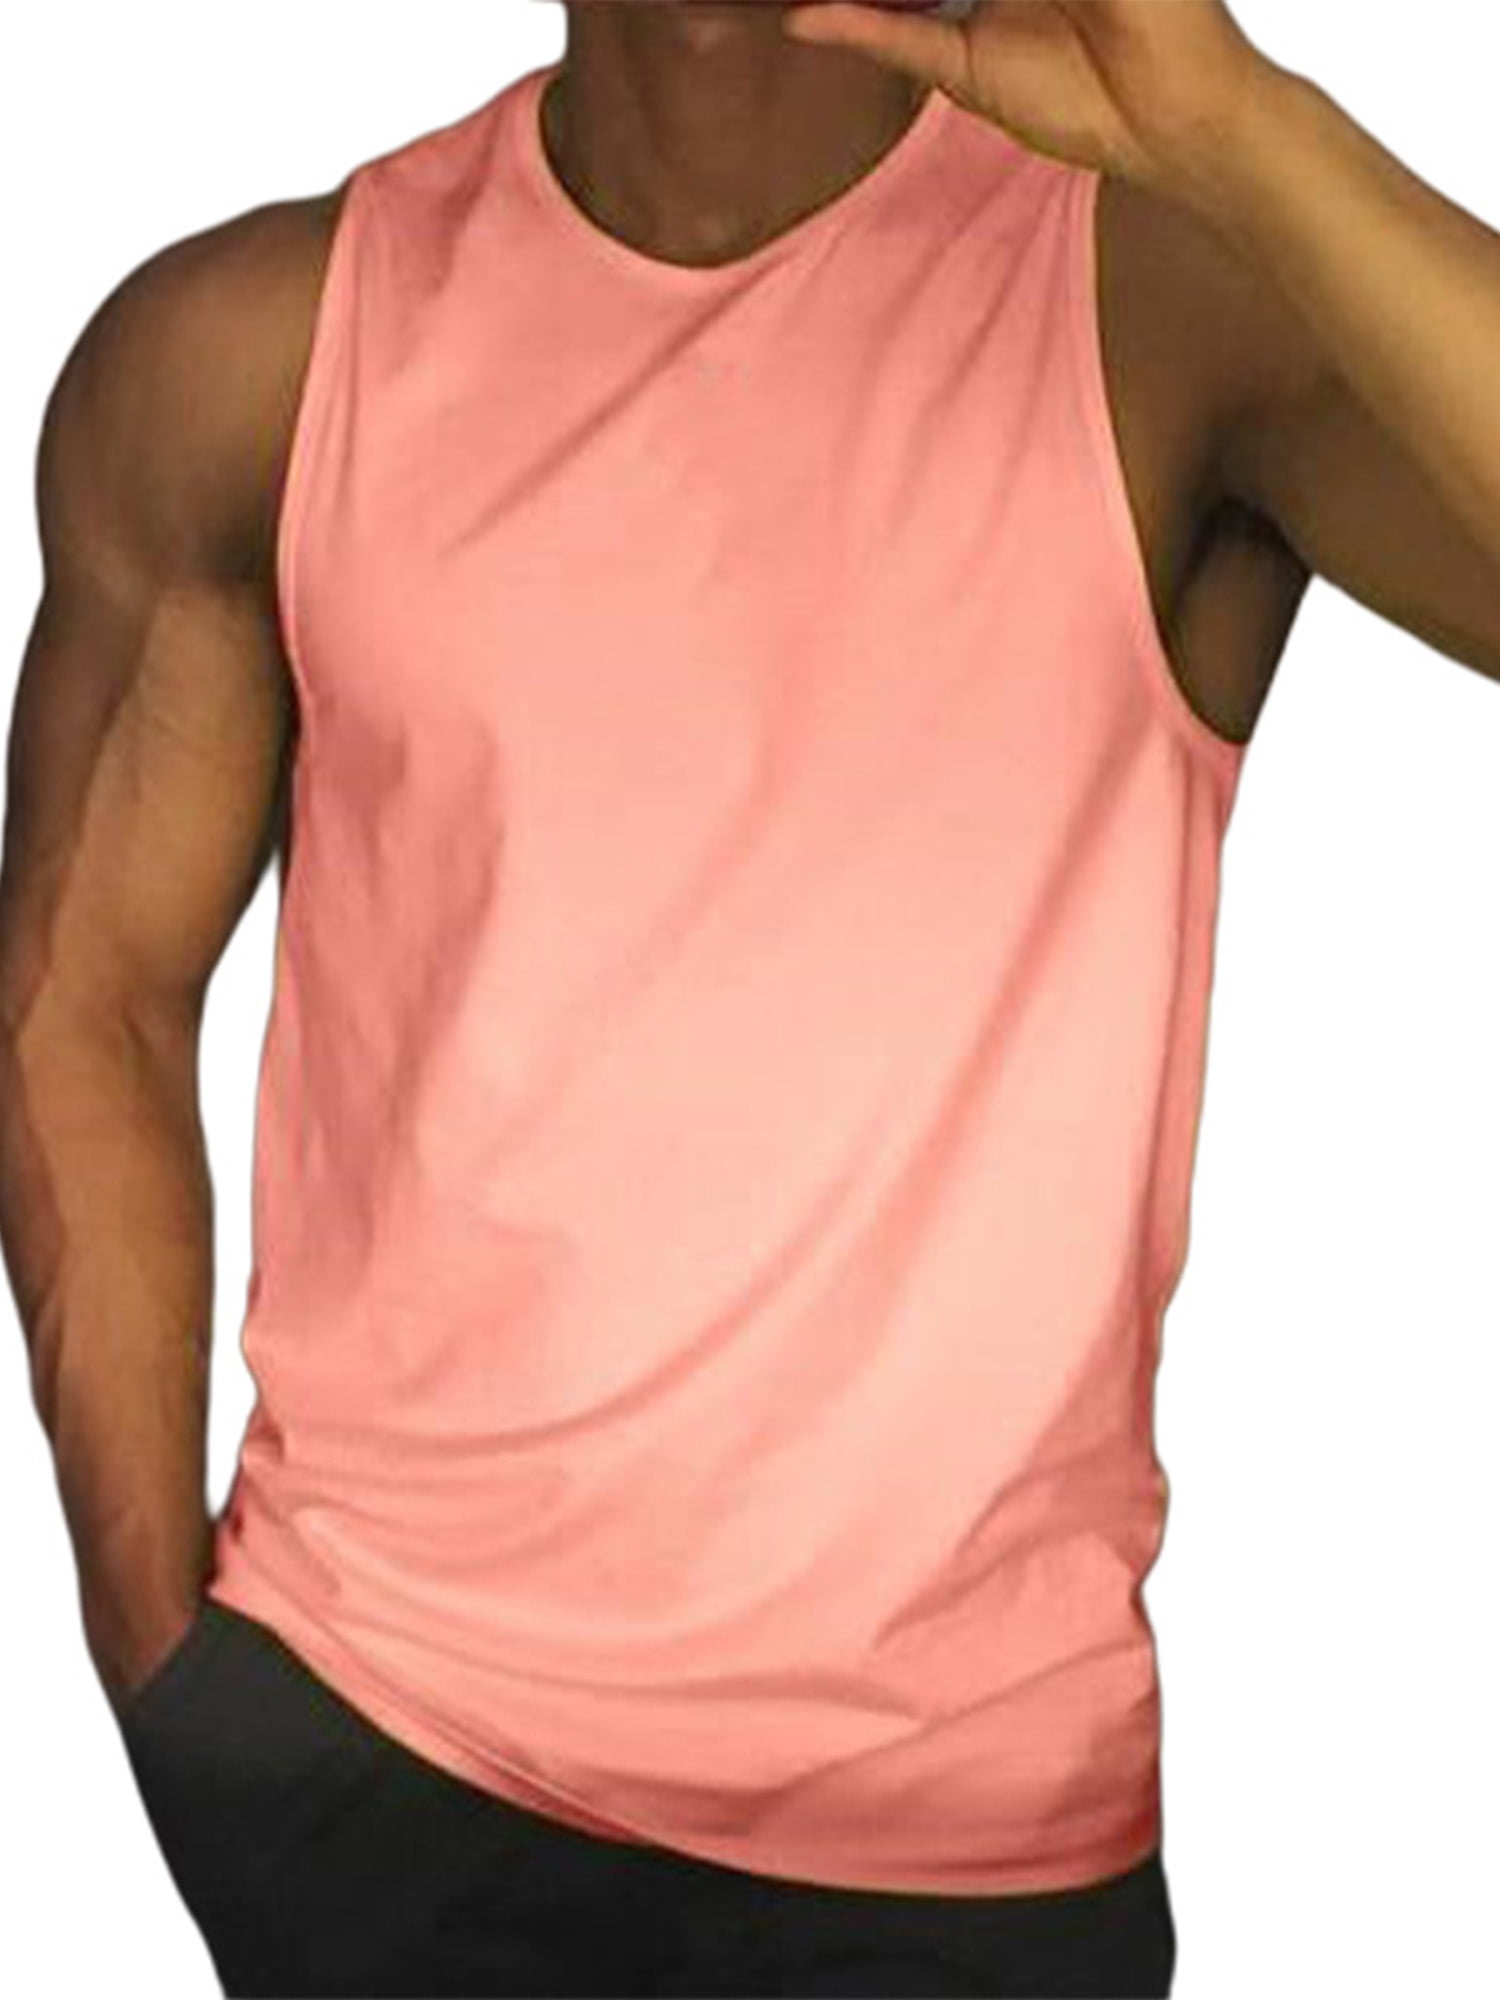 Uni Clau Mens Sleeveless T Shirts Muscle Workout Gym Cotton Tank Top Tee Shirts